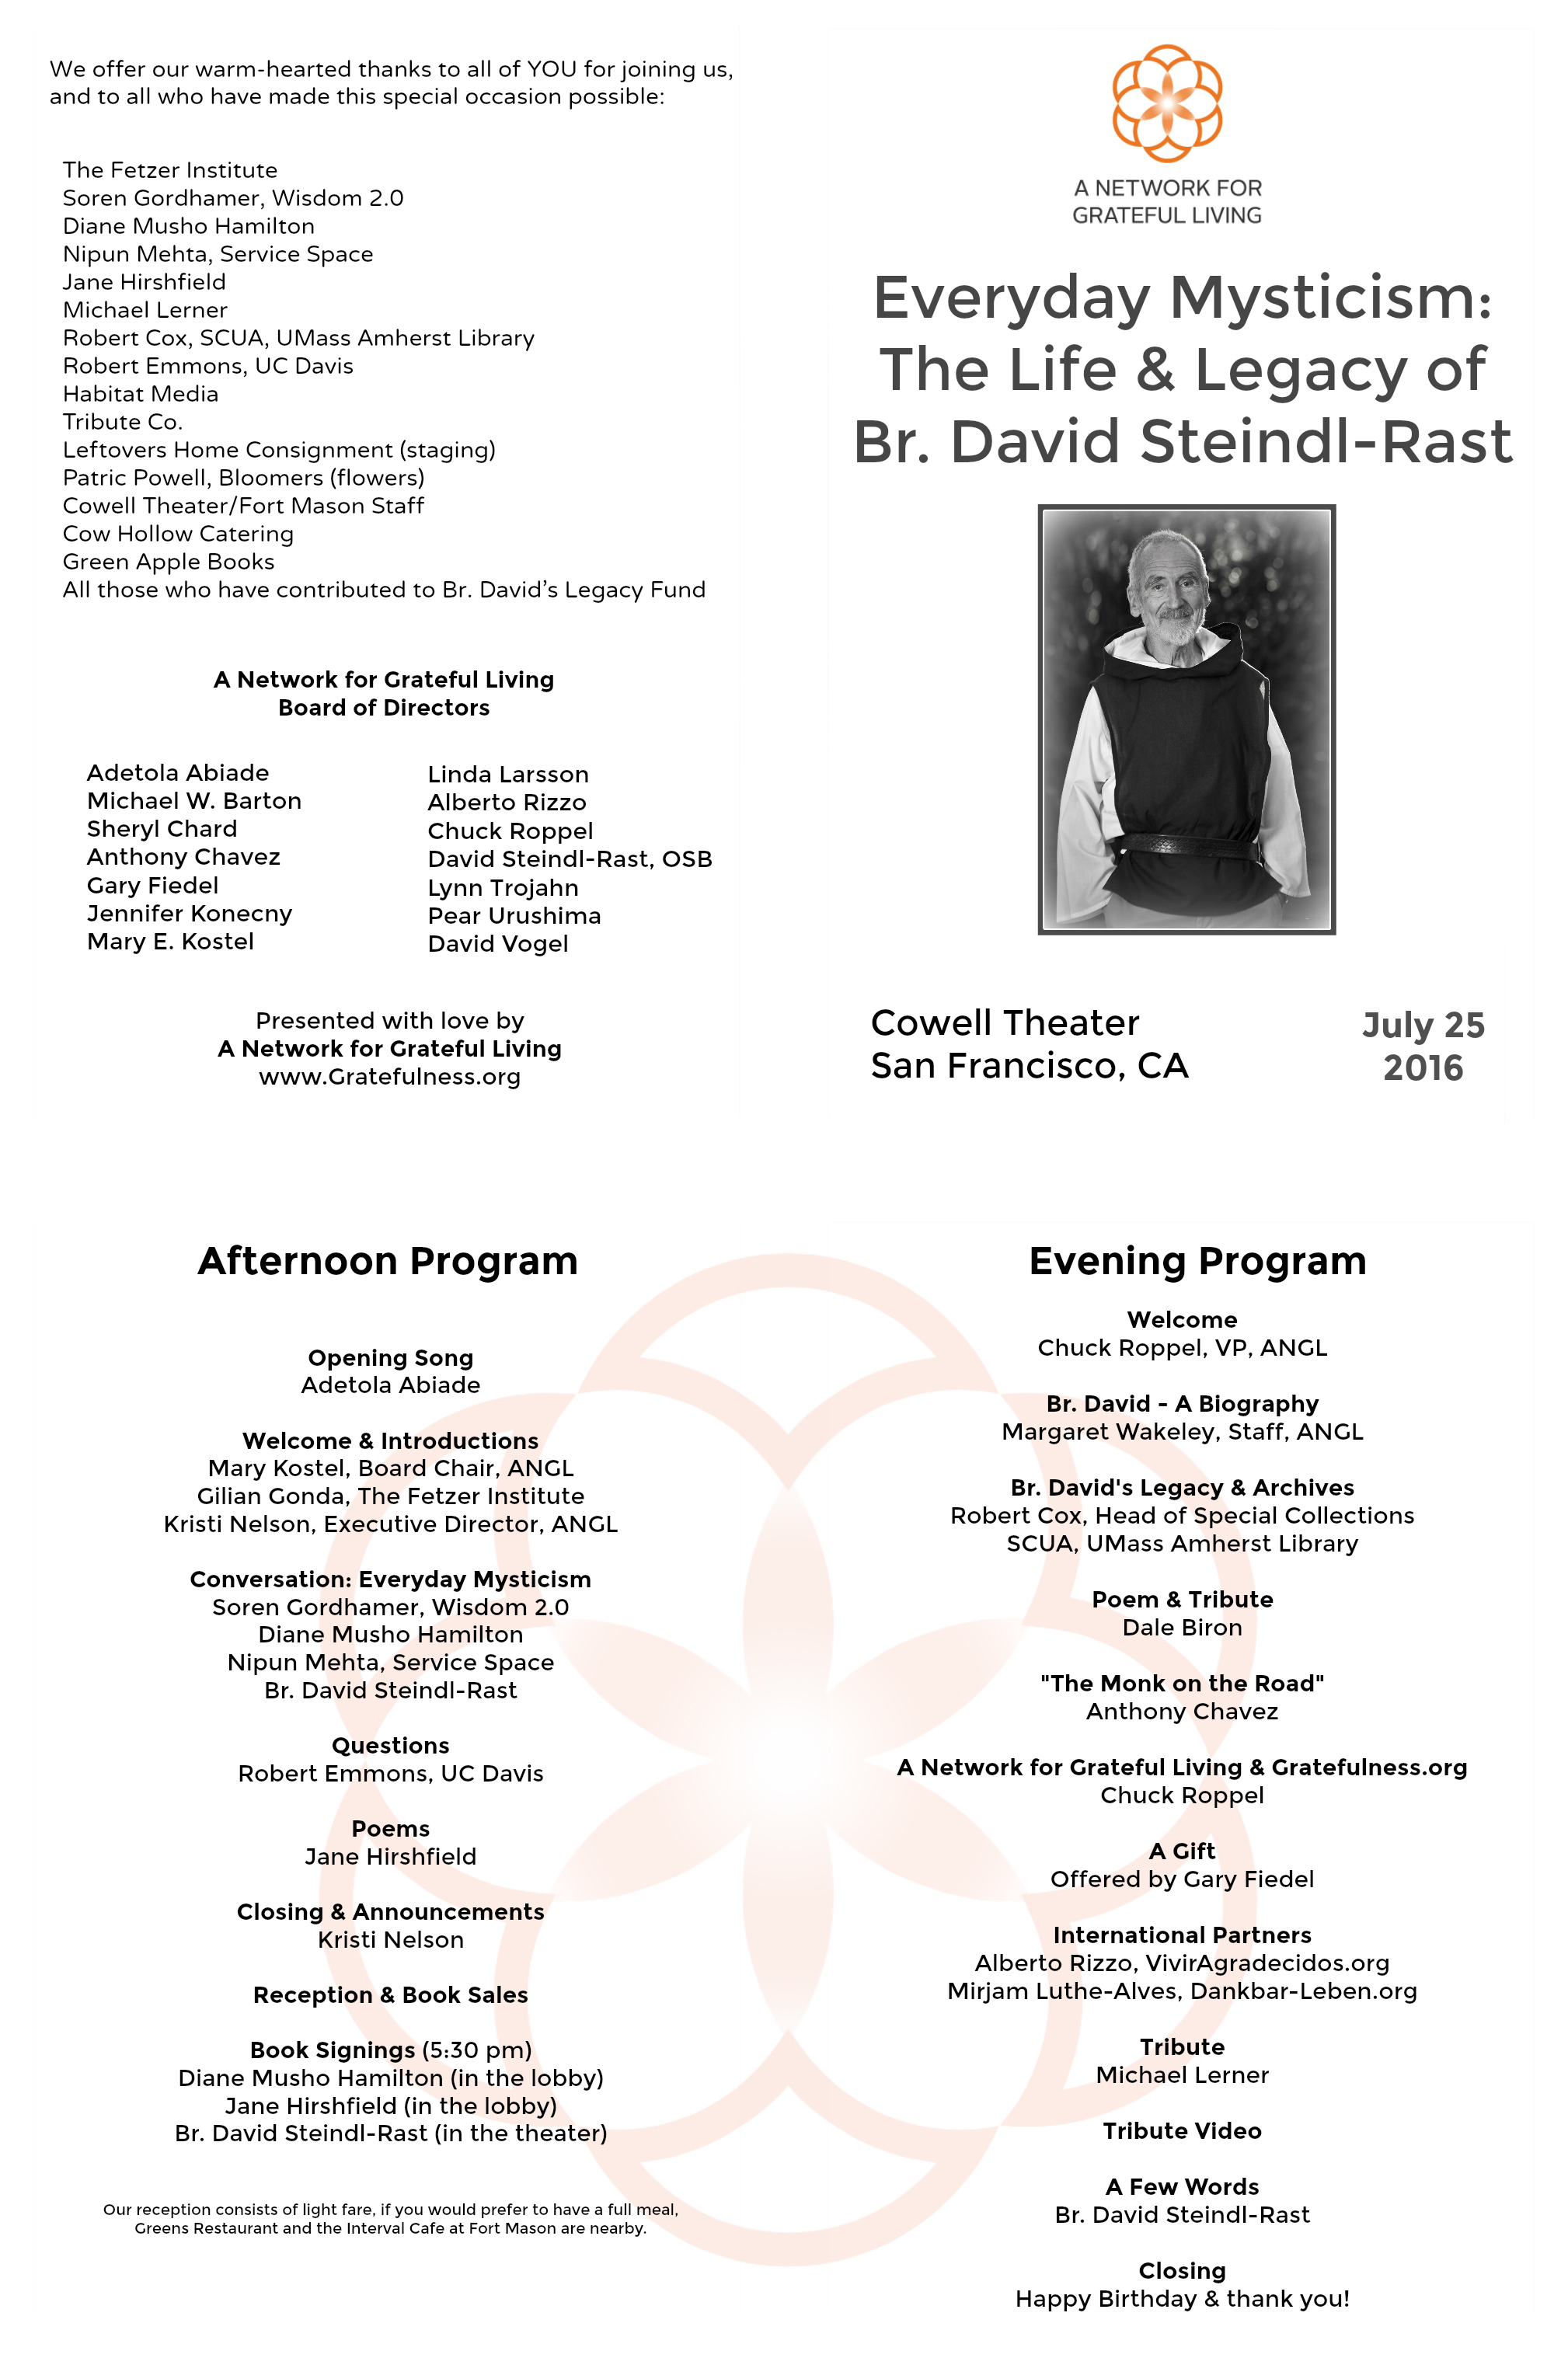 Br. David Steindl-Rast legacy program